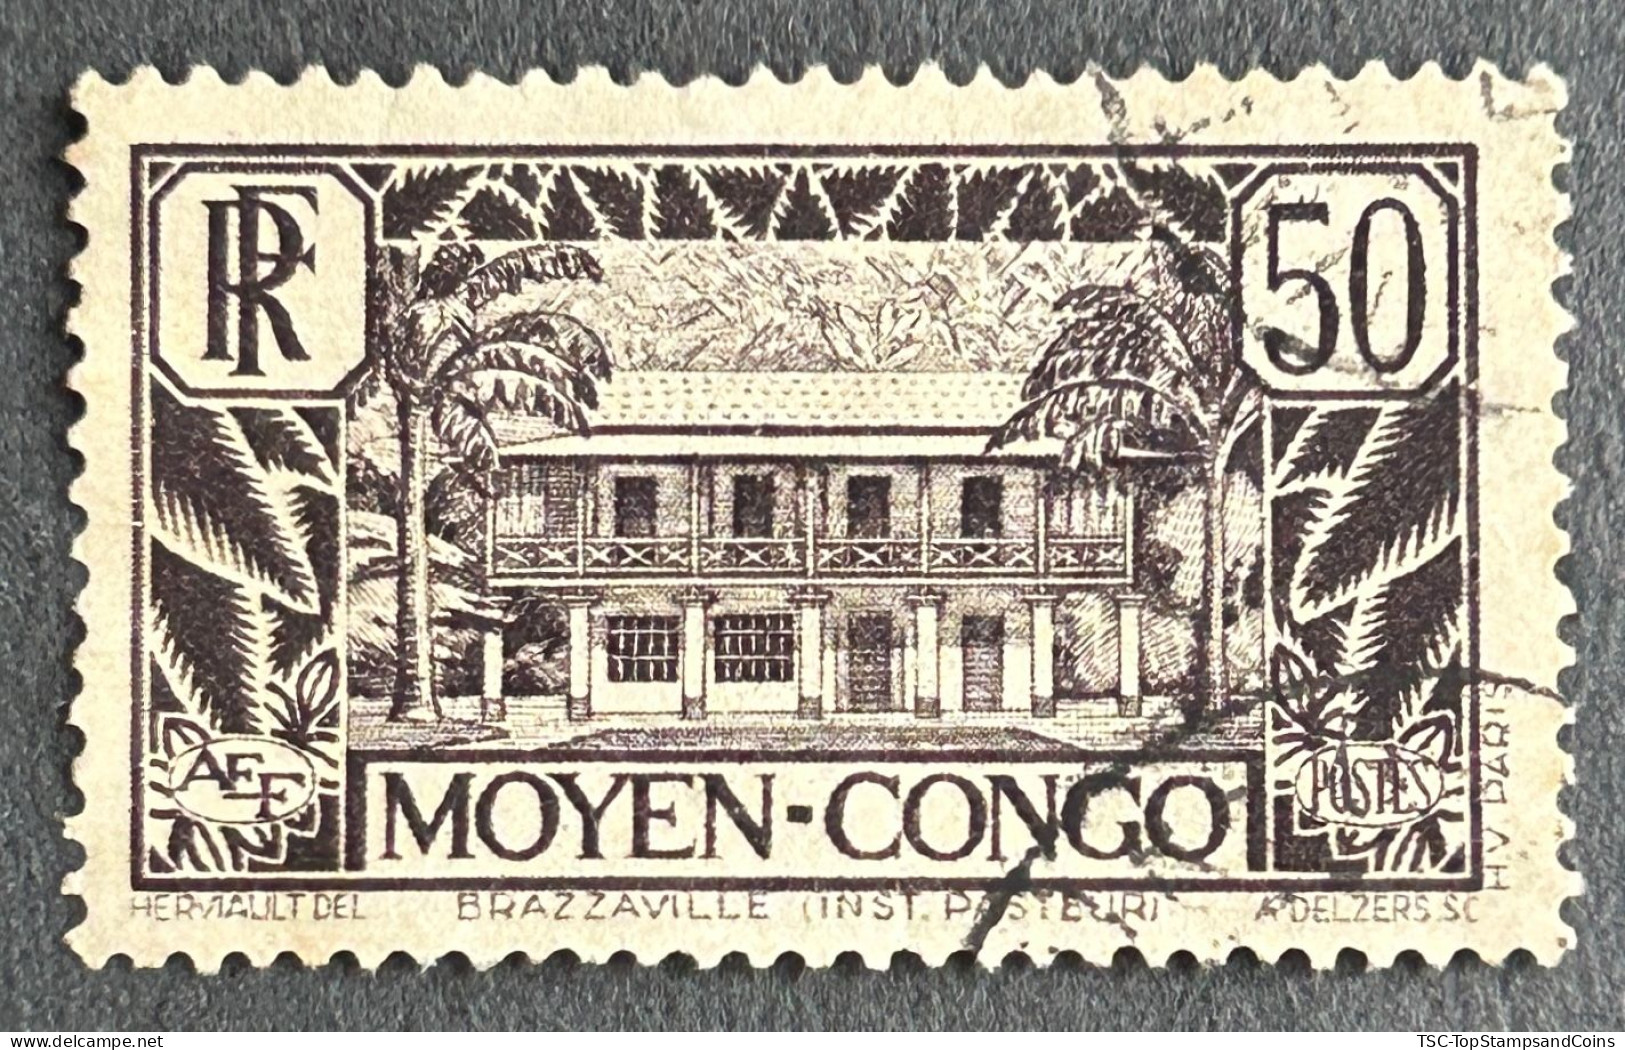 FRCG124U1 - Brazzaville - Pasteur Institute - 50 C Used Stamp - Middle Congo - 1933 - Gebraucht